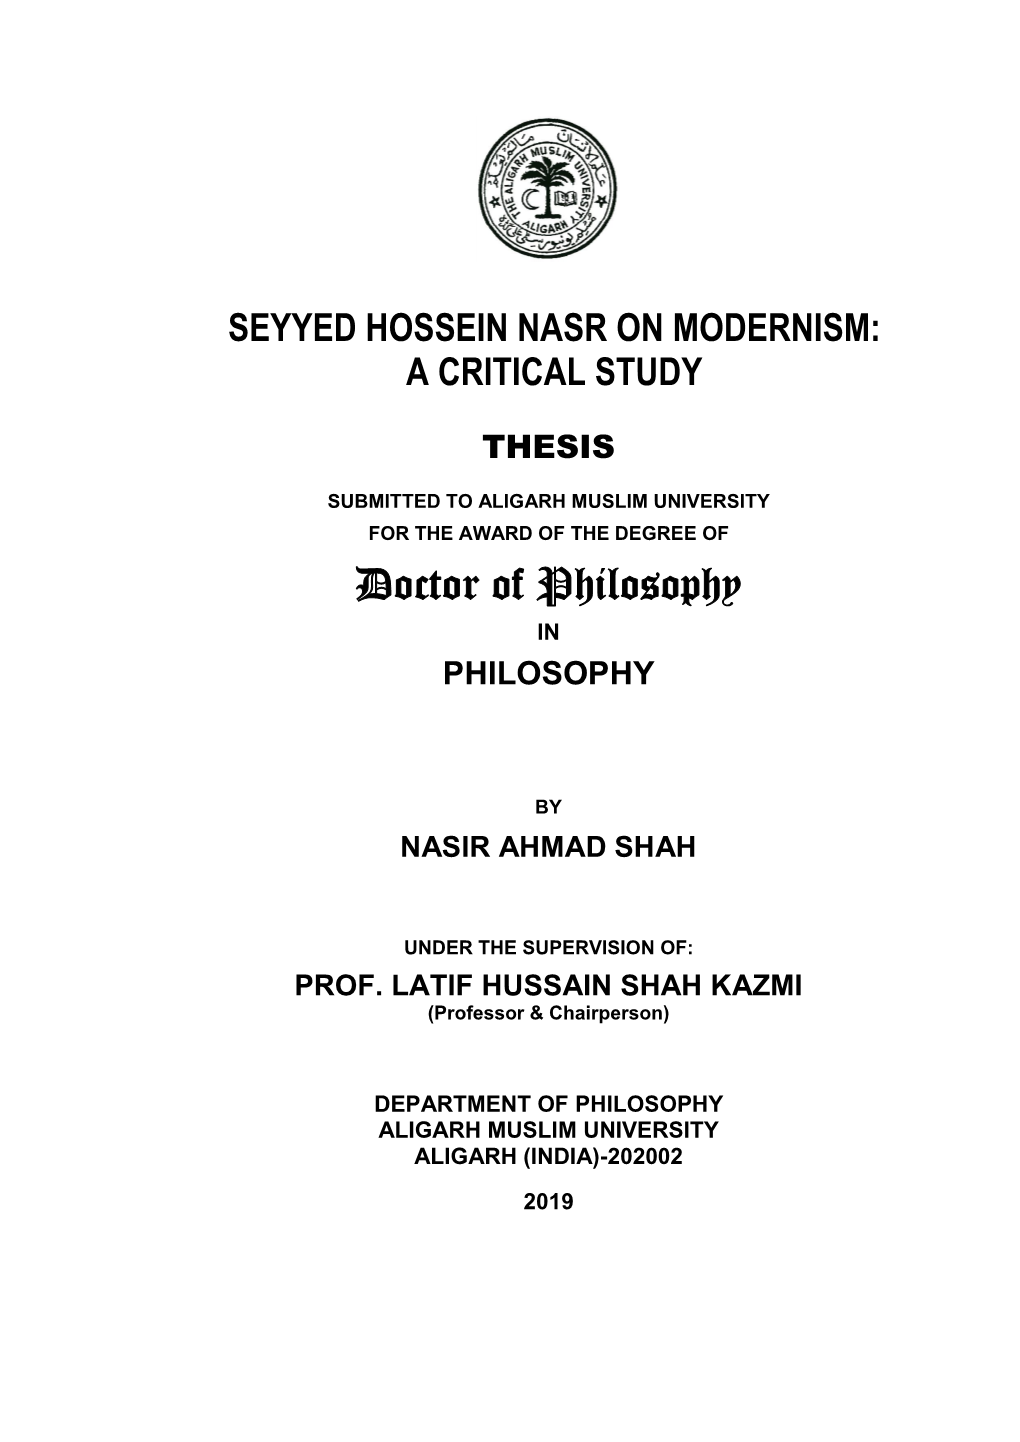 Seyyed Hossein Nasr on Modernism: a Critical Study